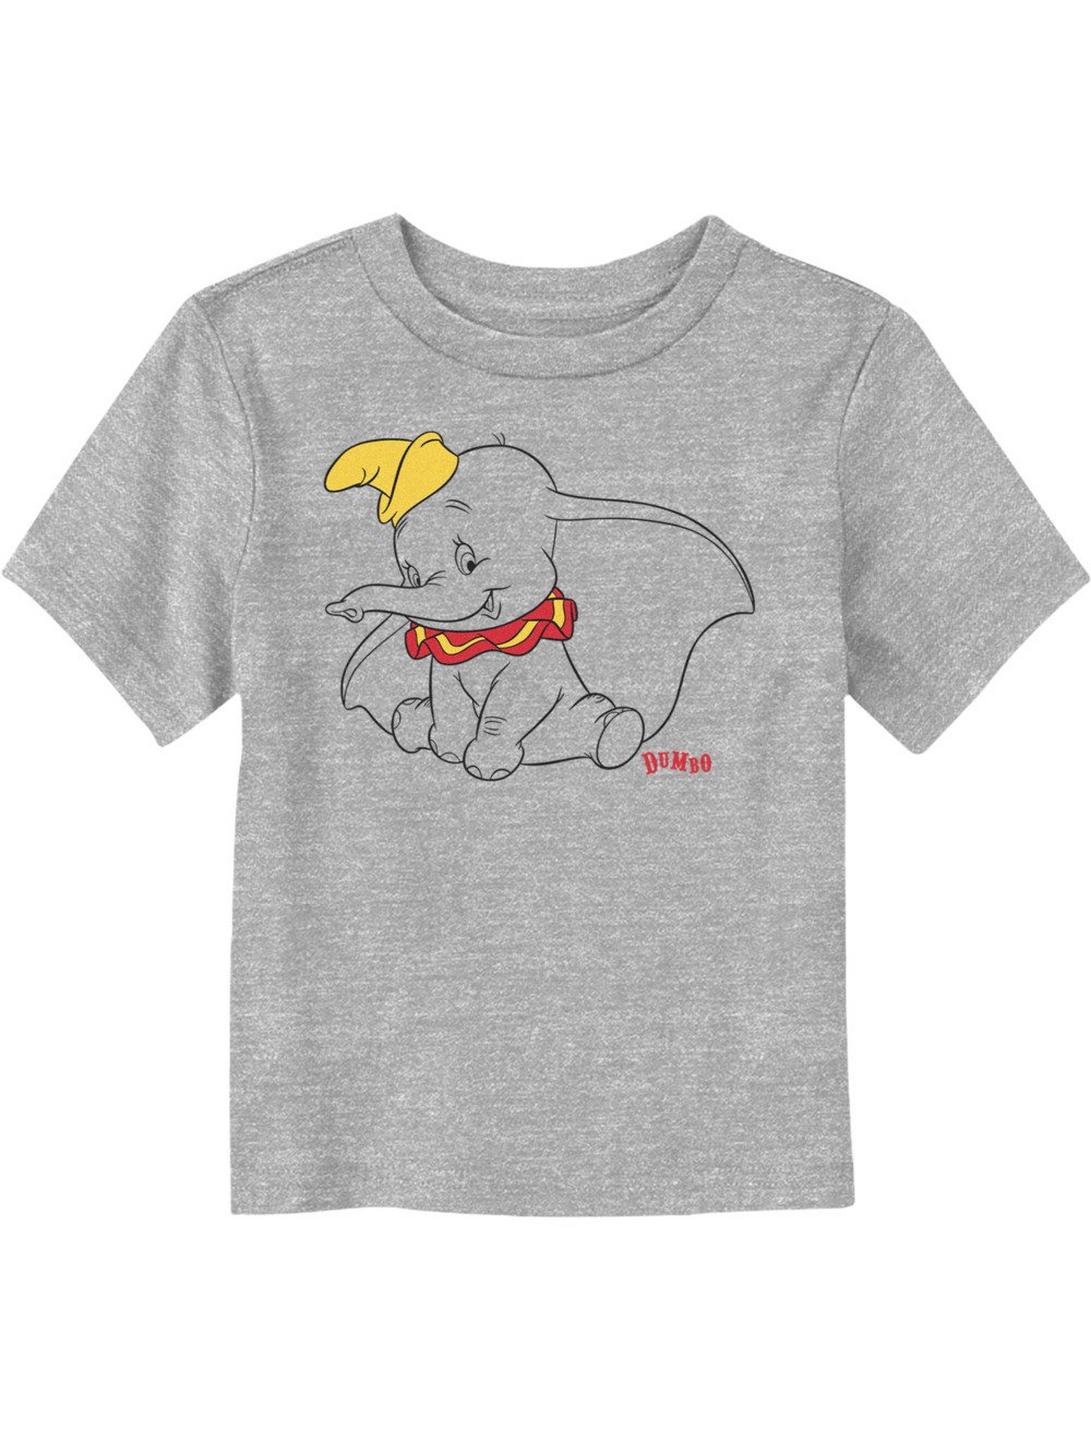 Disney Dumbo Simple Art Toddler T-Shirt, ATH HTR, hi-res